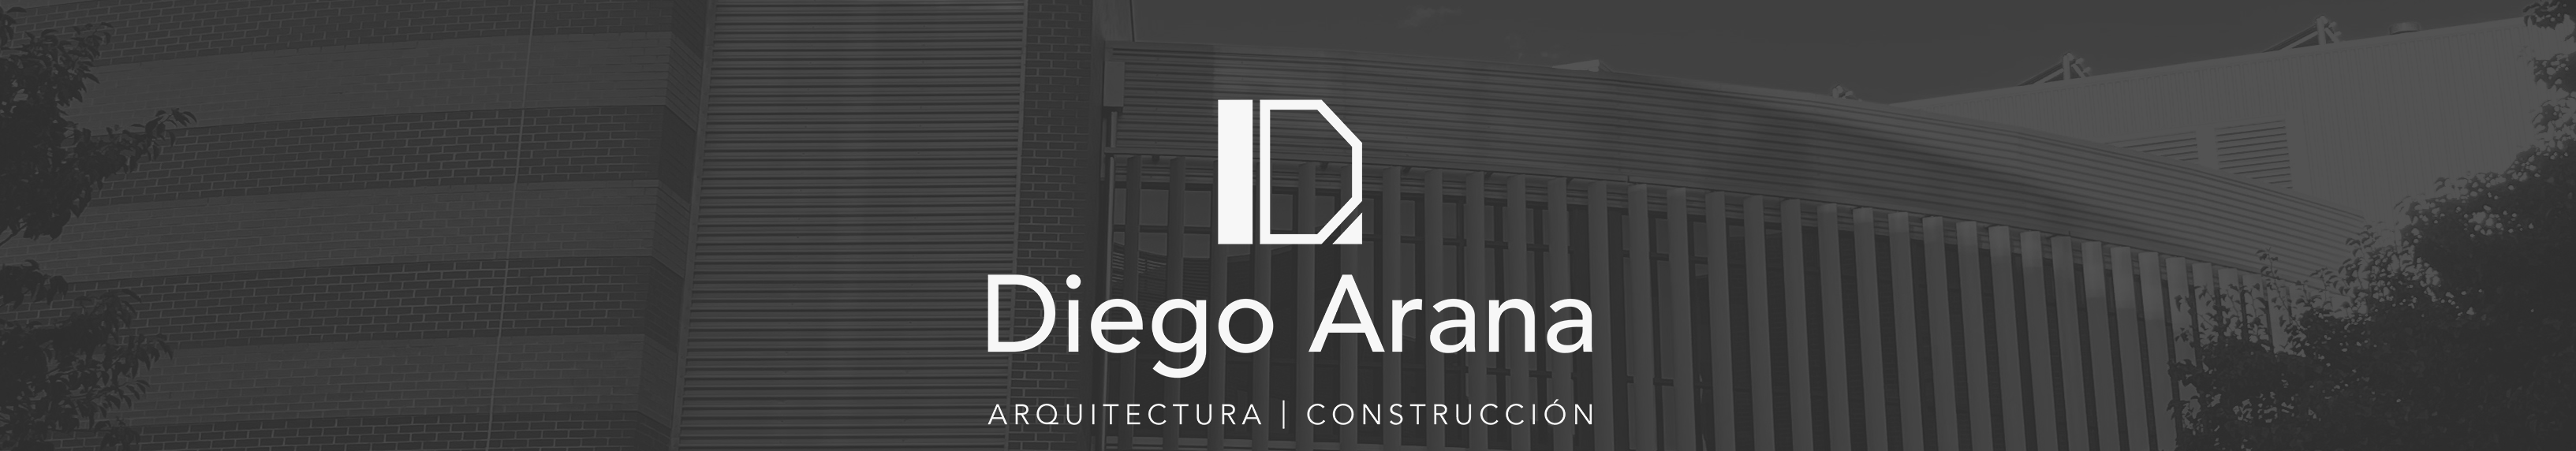 Diego Arana's profile banner